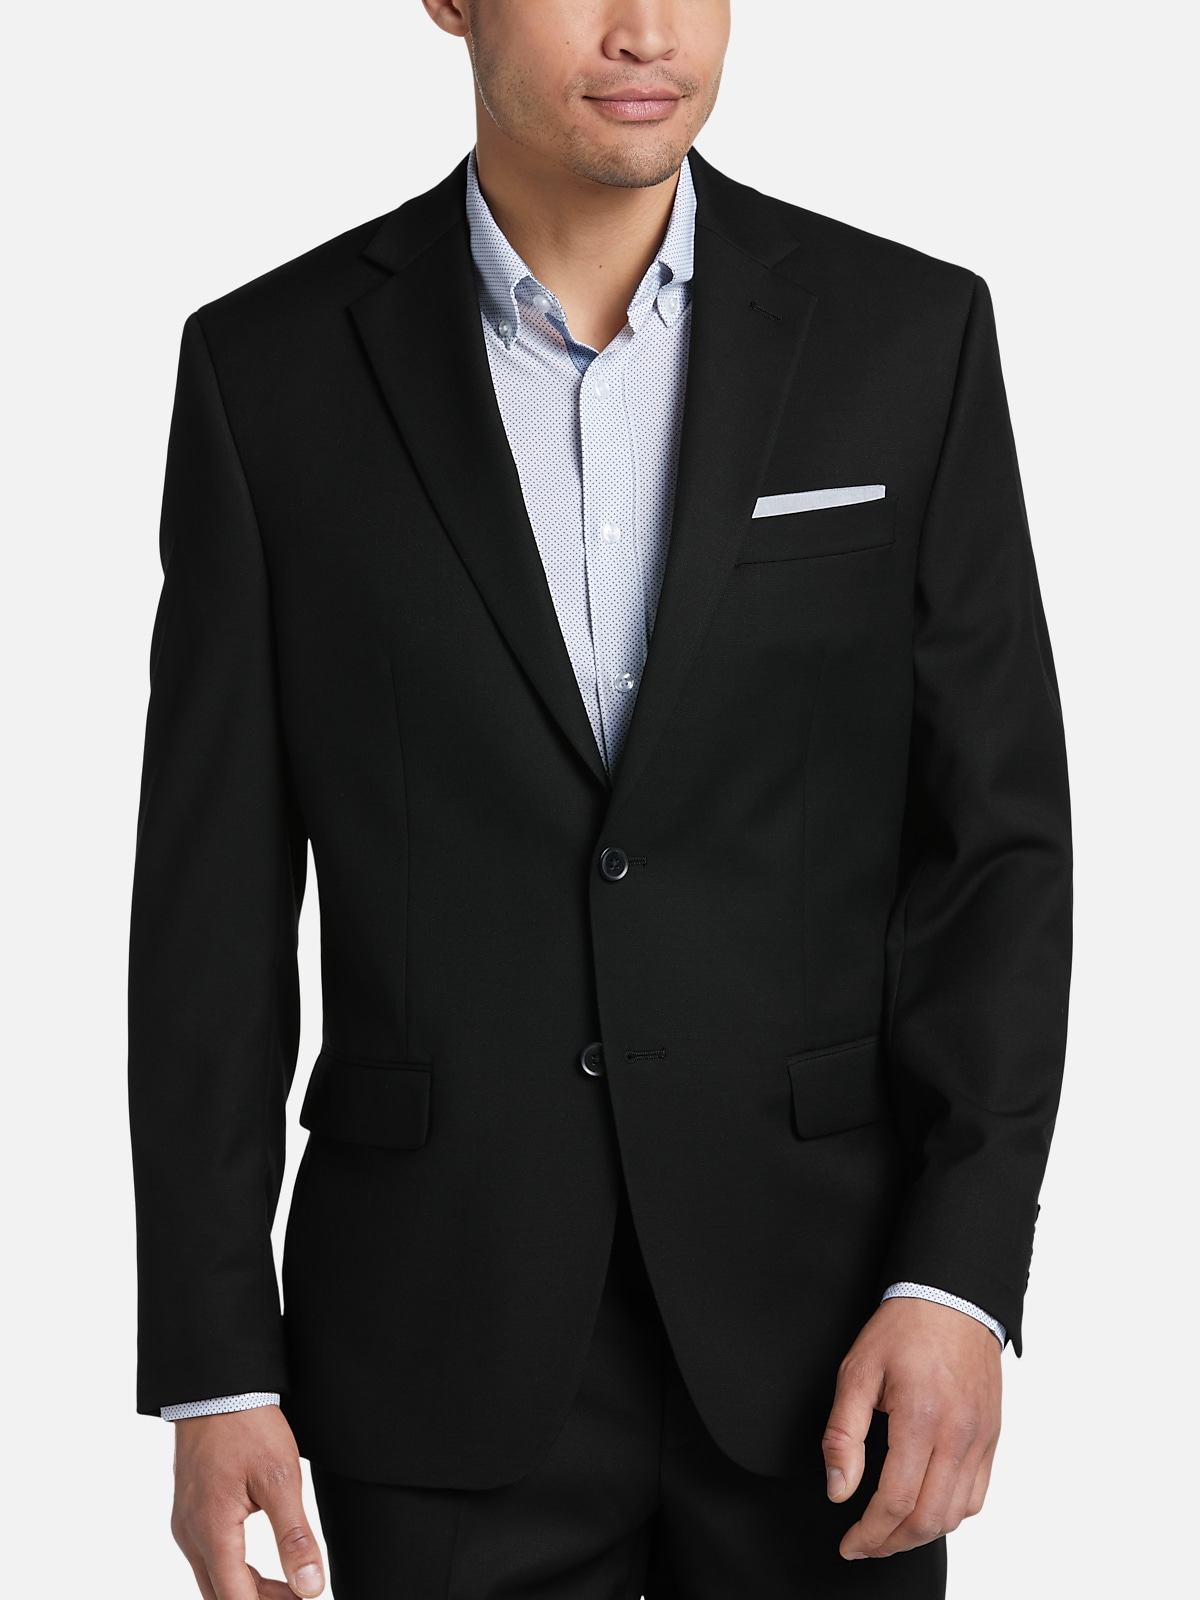 Michael Strahan Classic Fit Suit Separates Jacket, Best Sellers